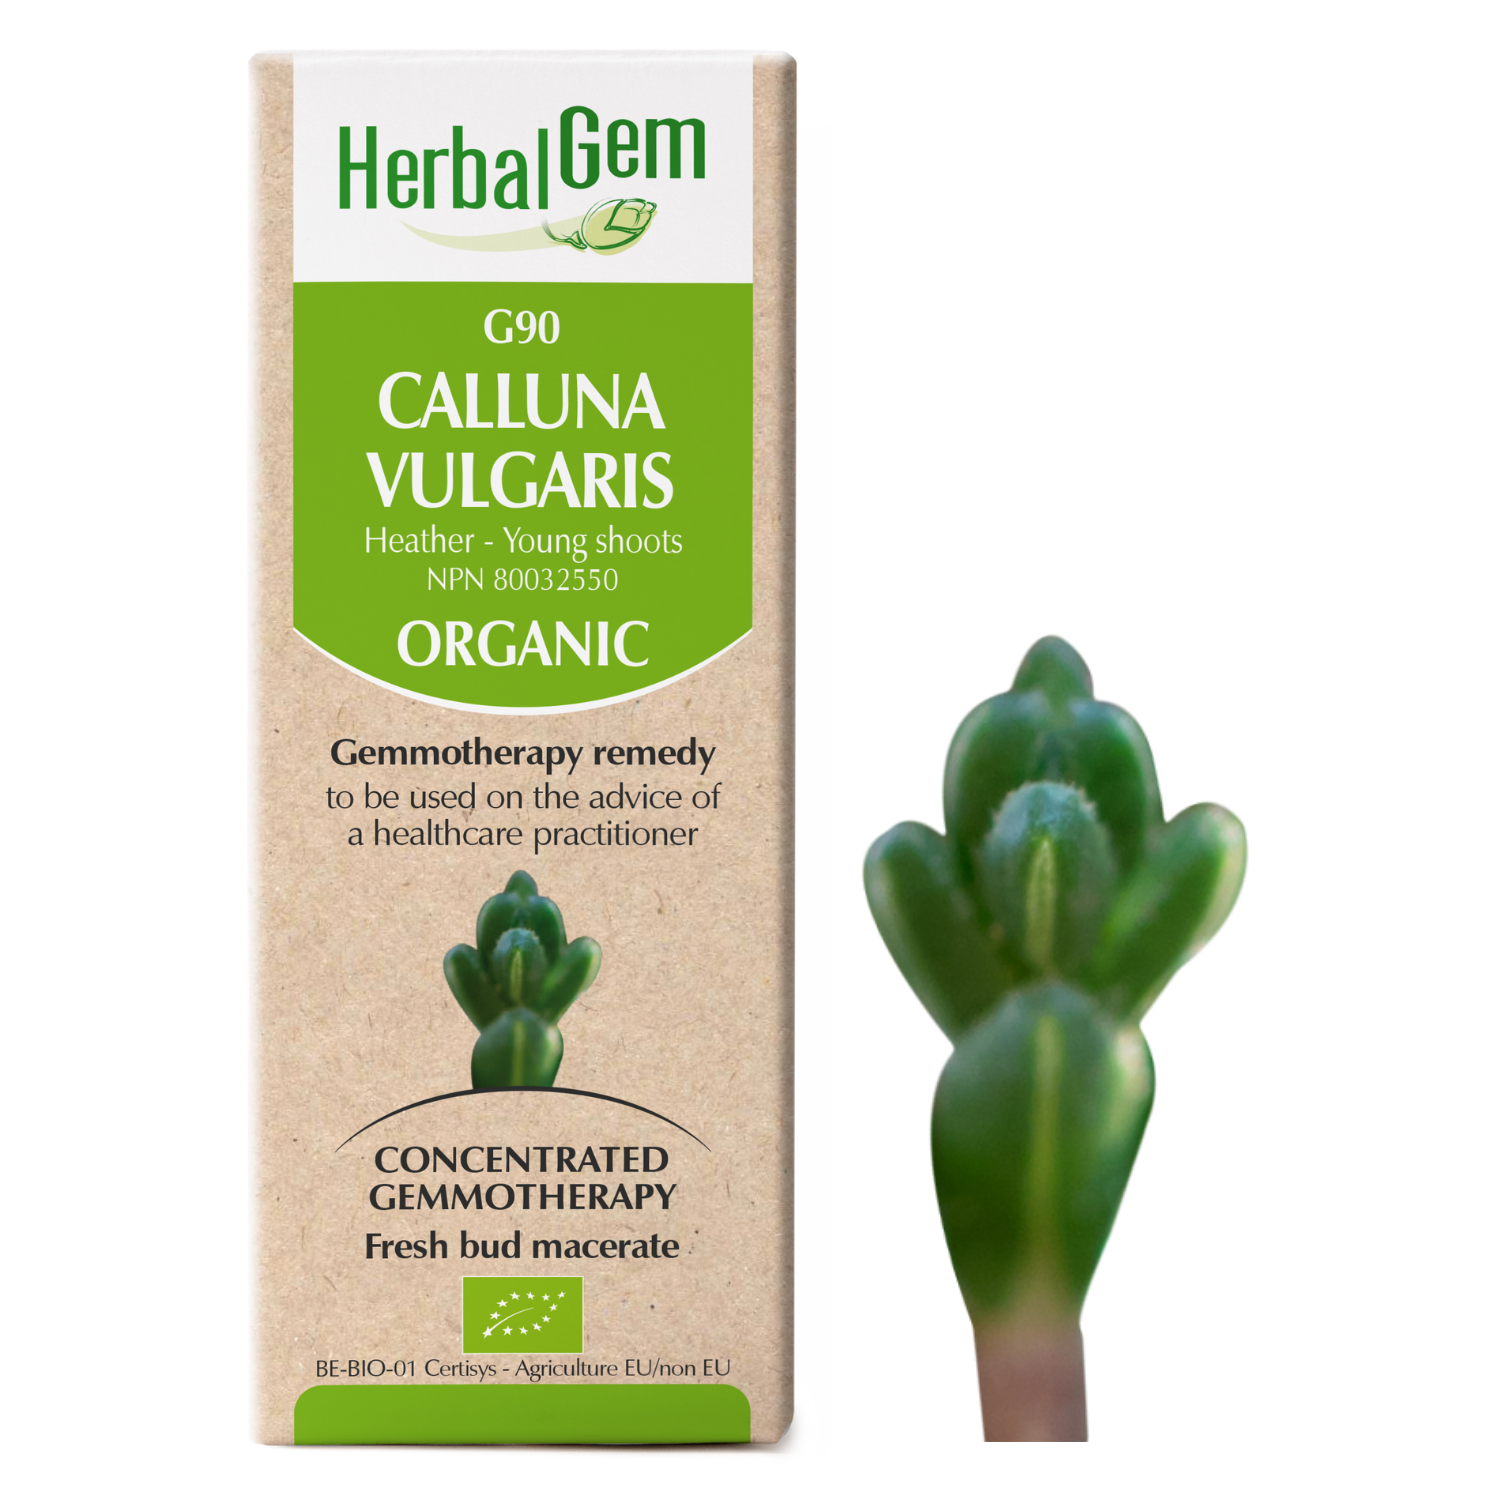 G90 Calluna vulgaris Gemmotherapy Chronic, 50ml